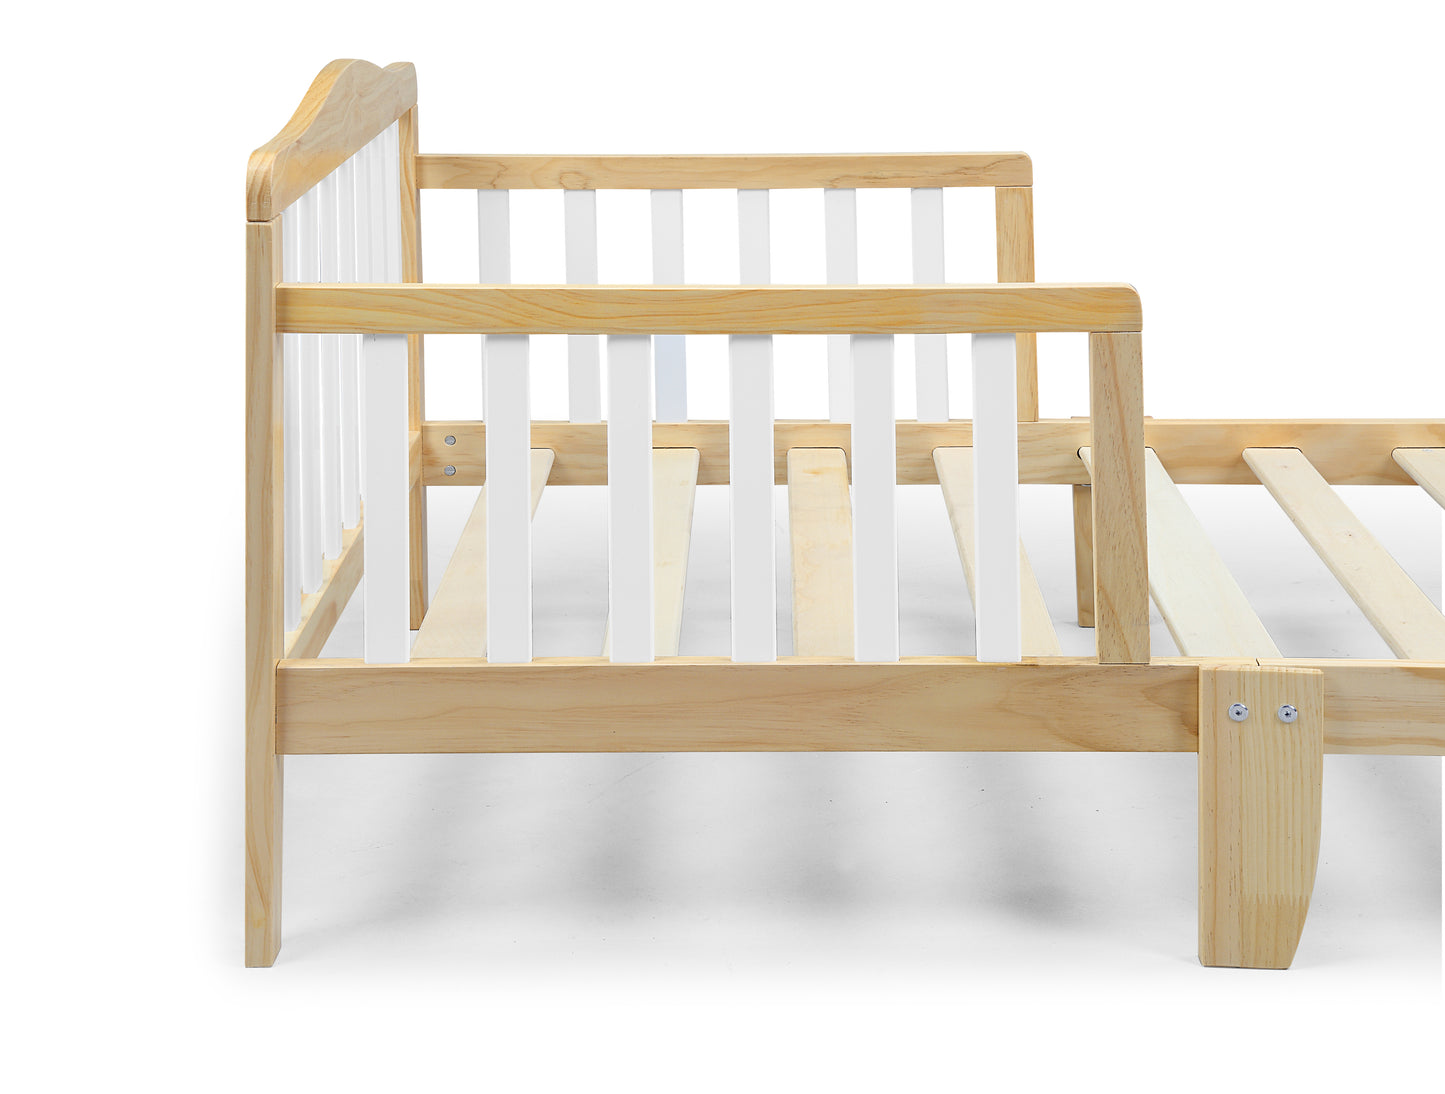 Twain Toddler Bed Natural/White